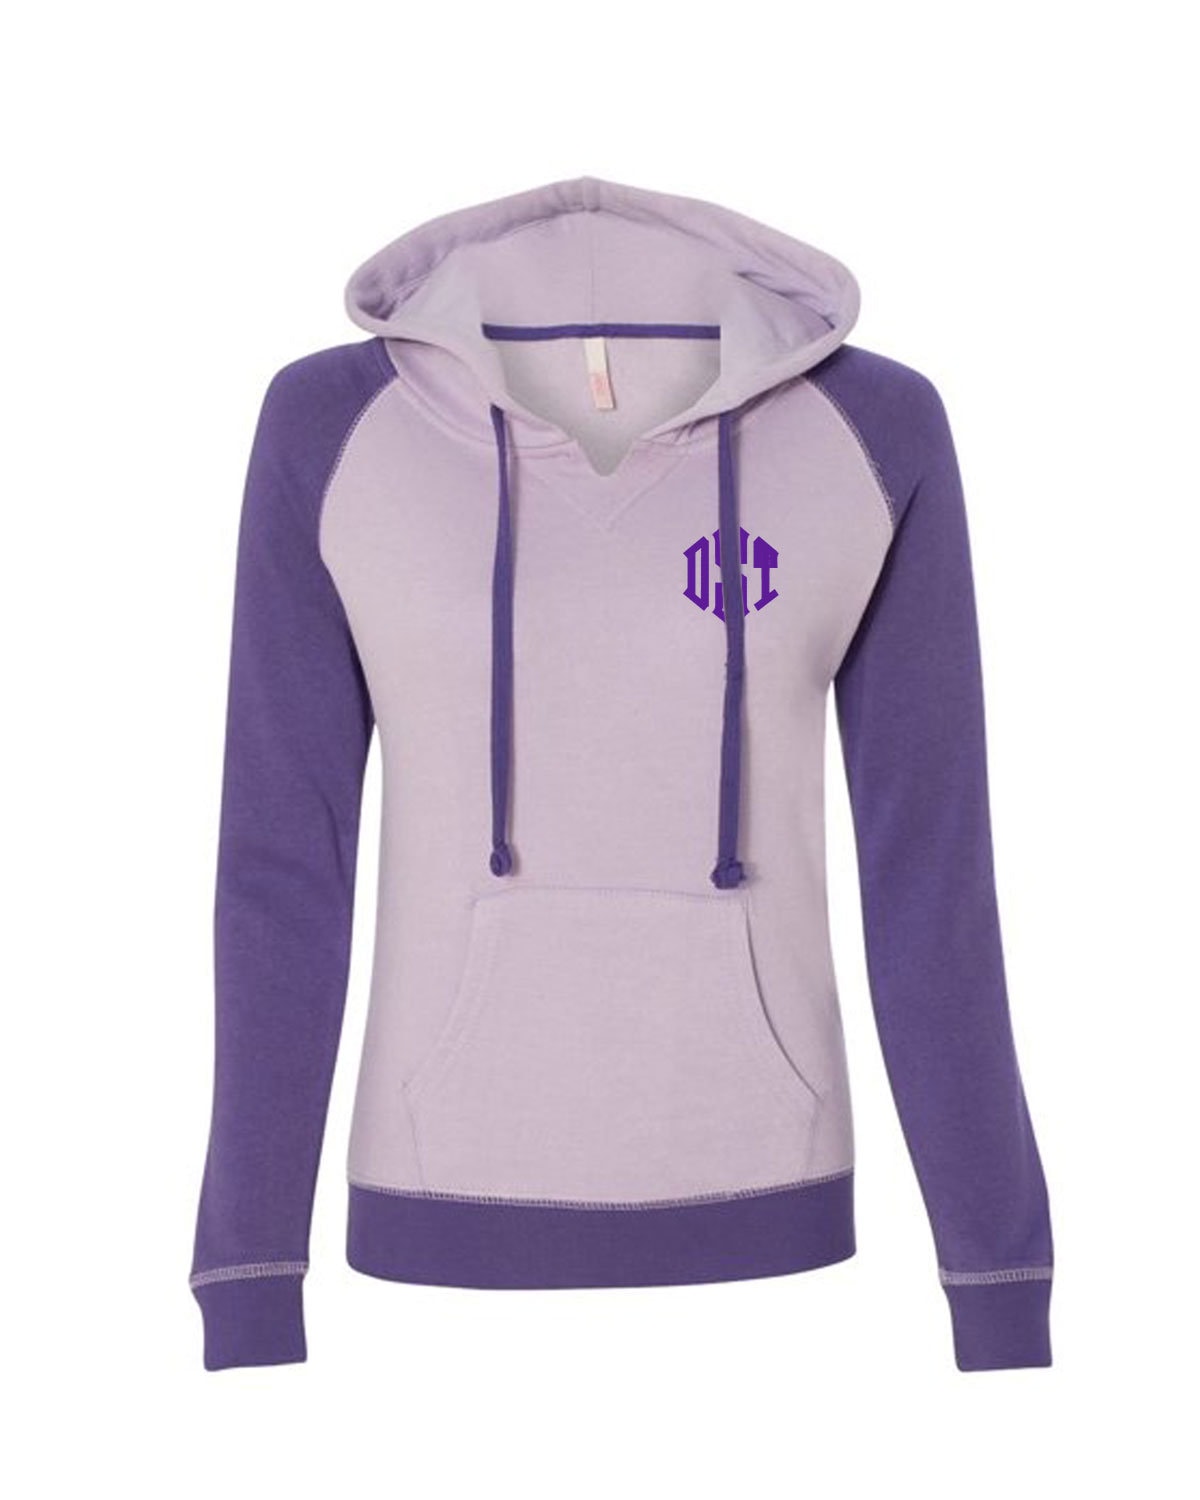 MV Sport Women’s Raglan Hooded Sweatshirt-Purple with Monogram